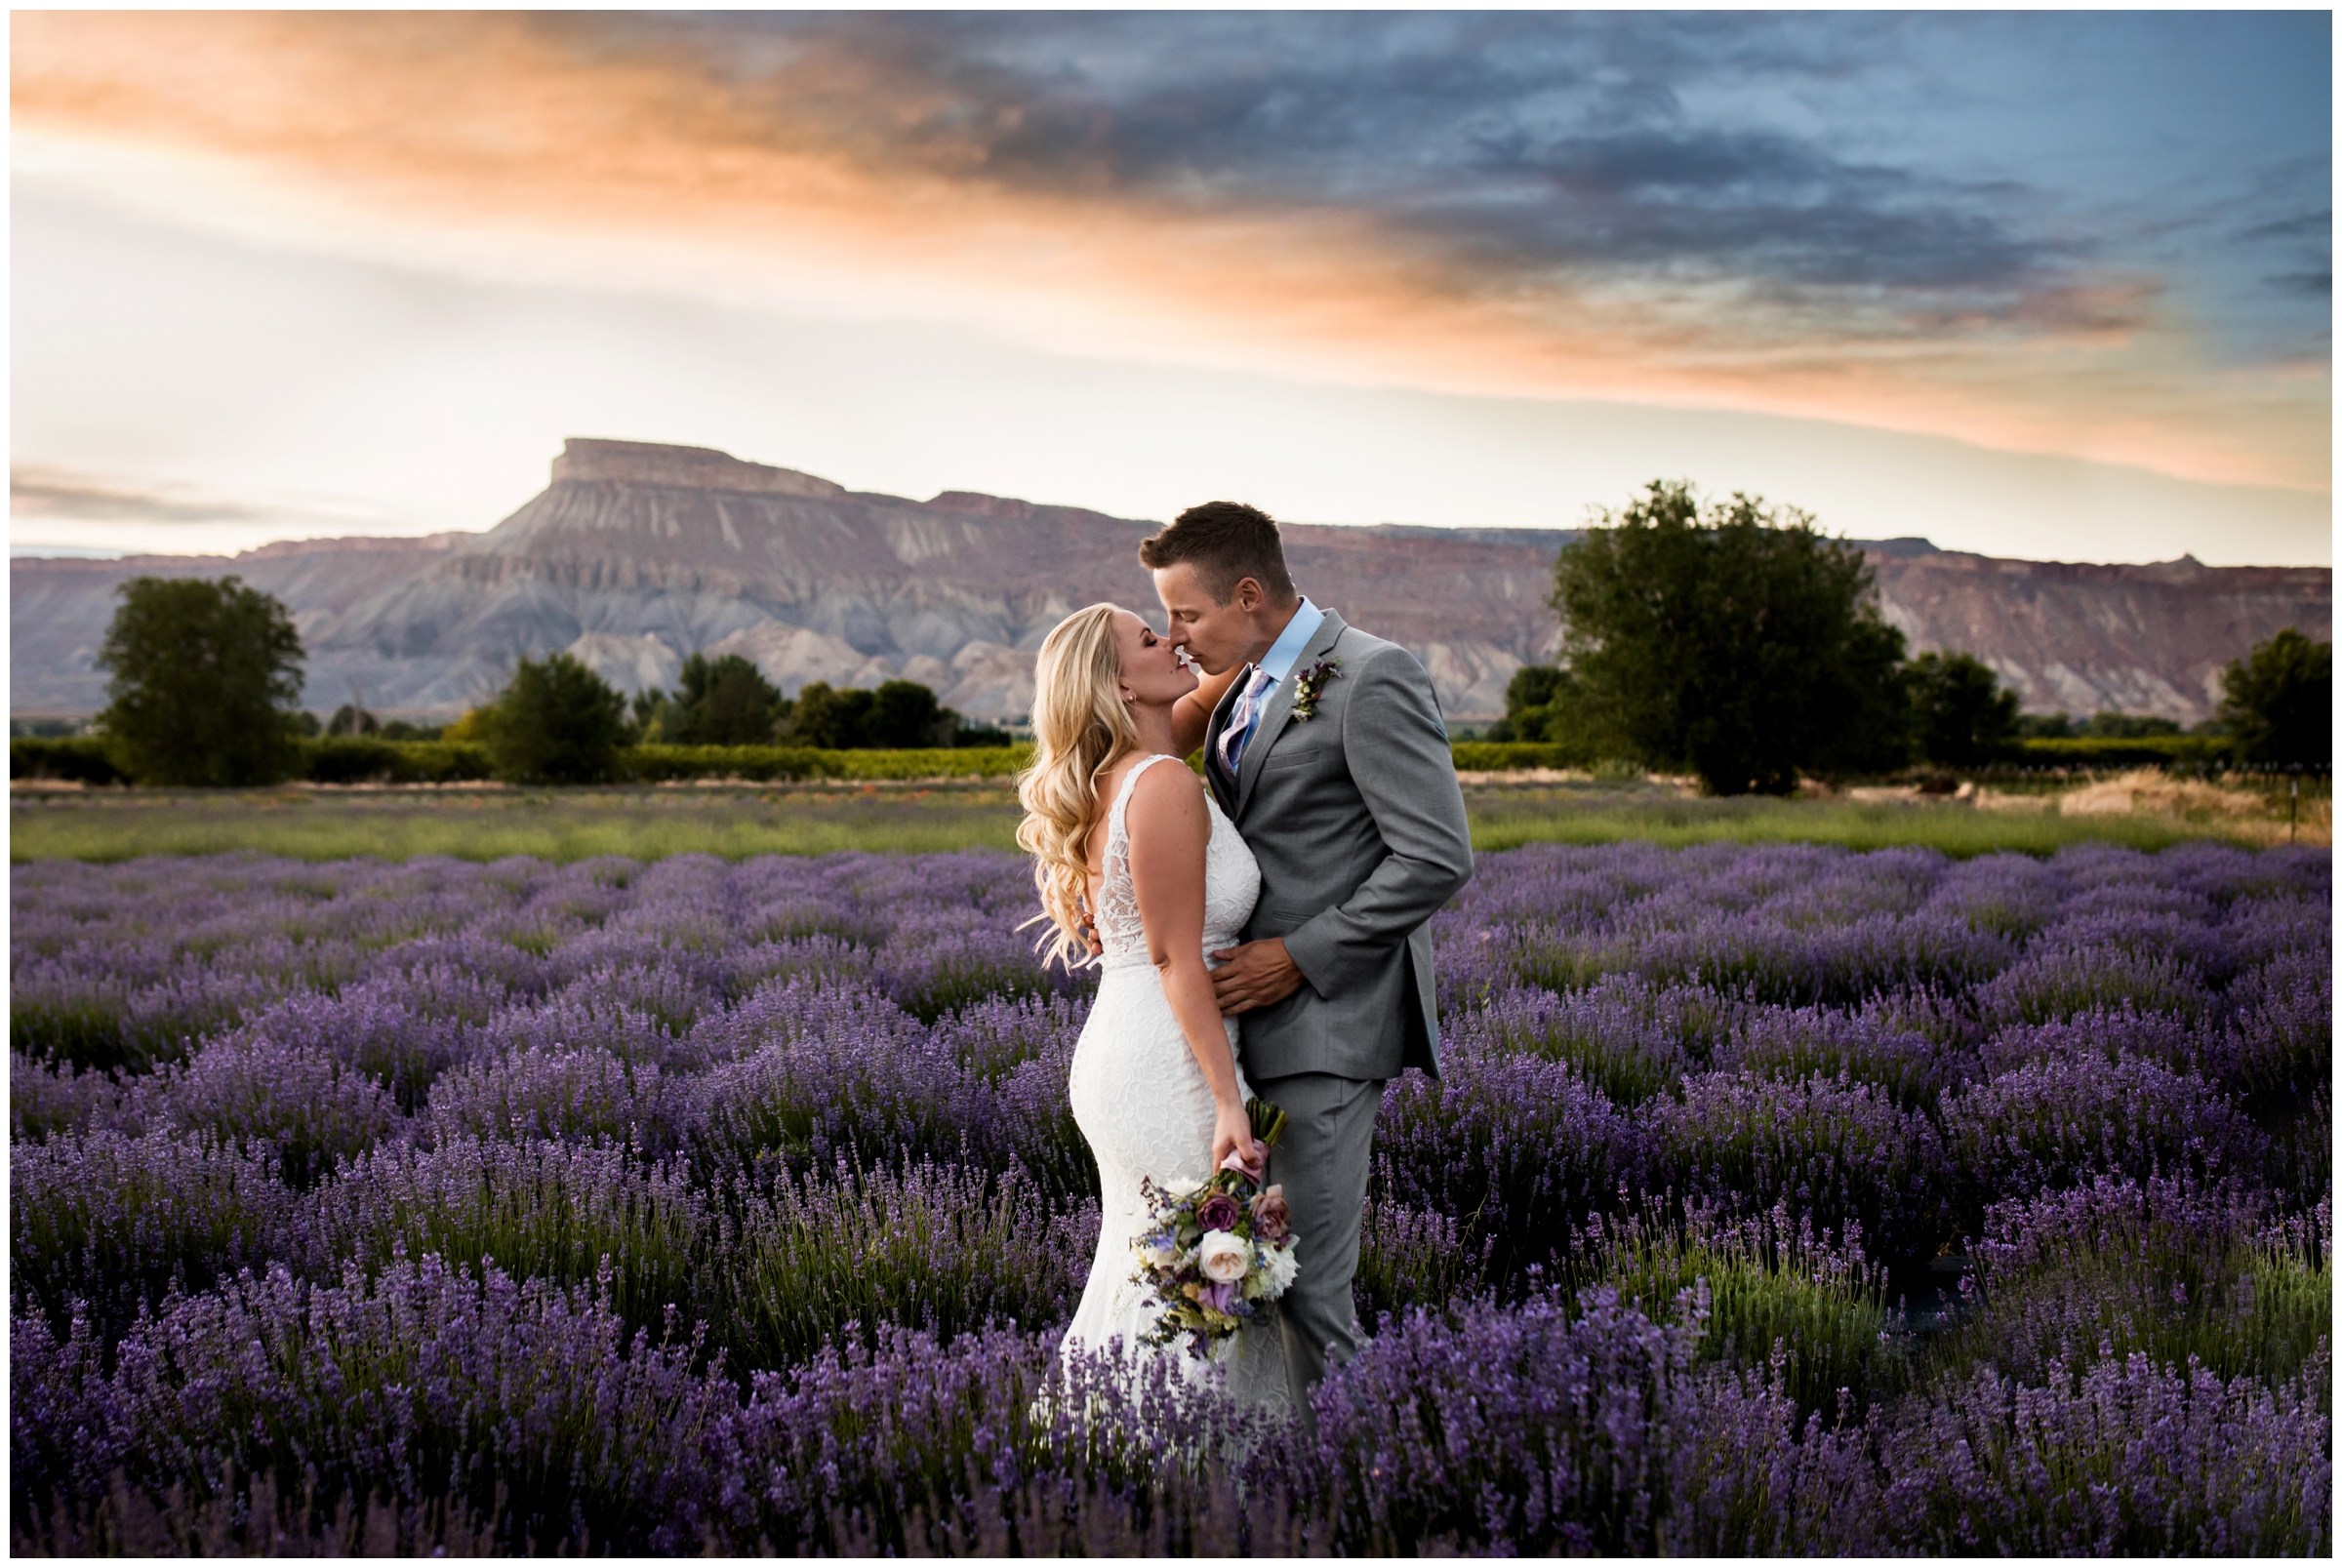 Grand Junction wedding photos at Sage Creations Organic Farm by Colorado photographer Plum Pretty Photography